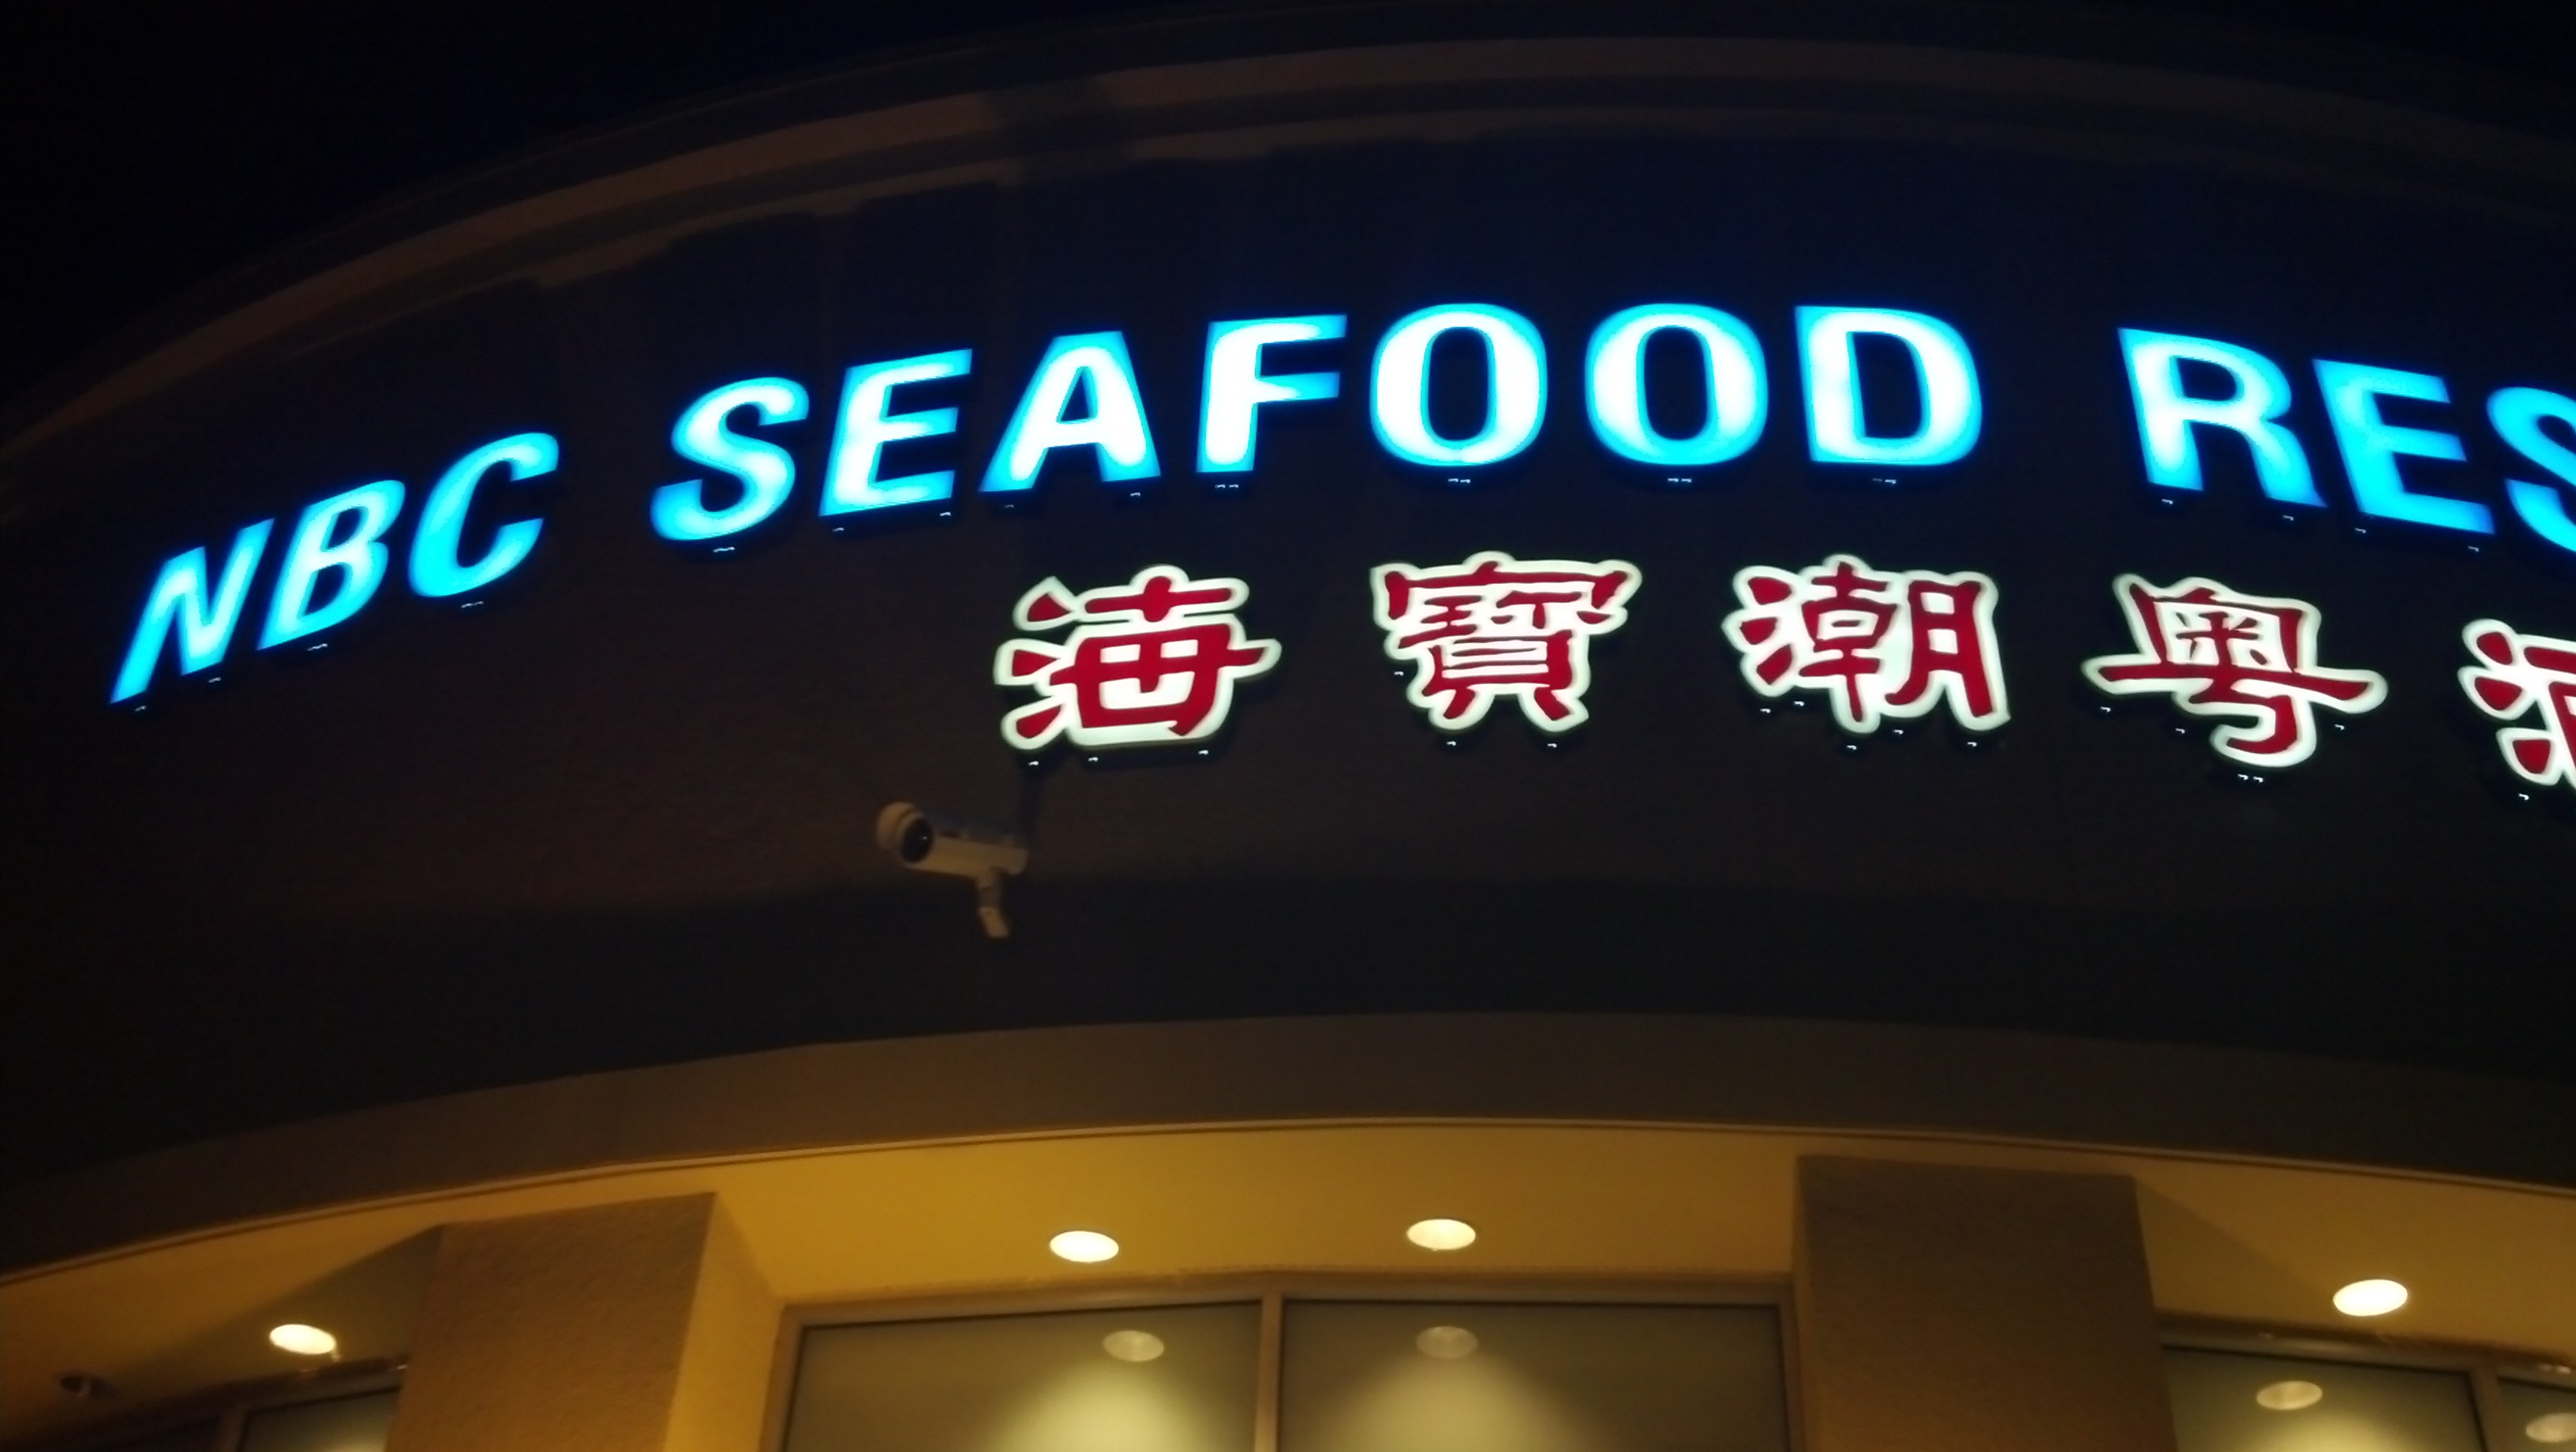 Lobster at NBC Seafood